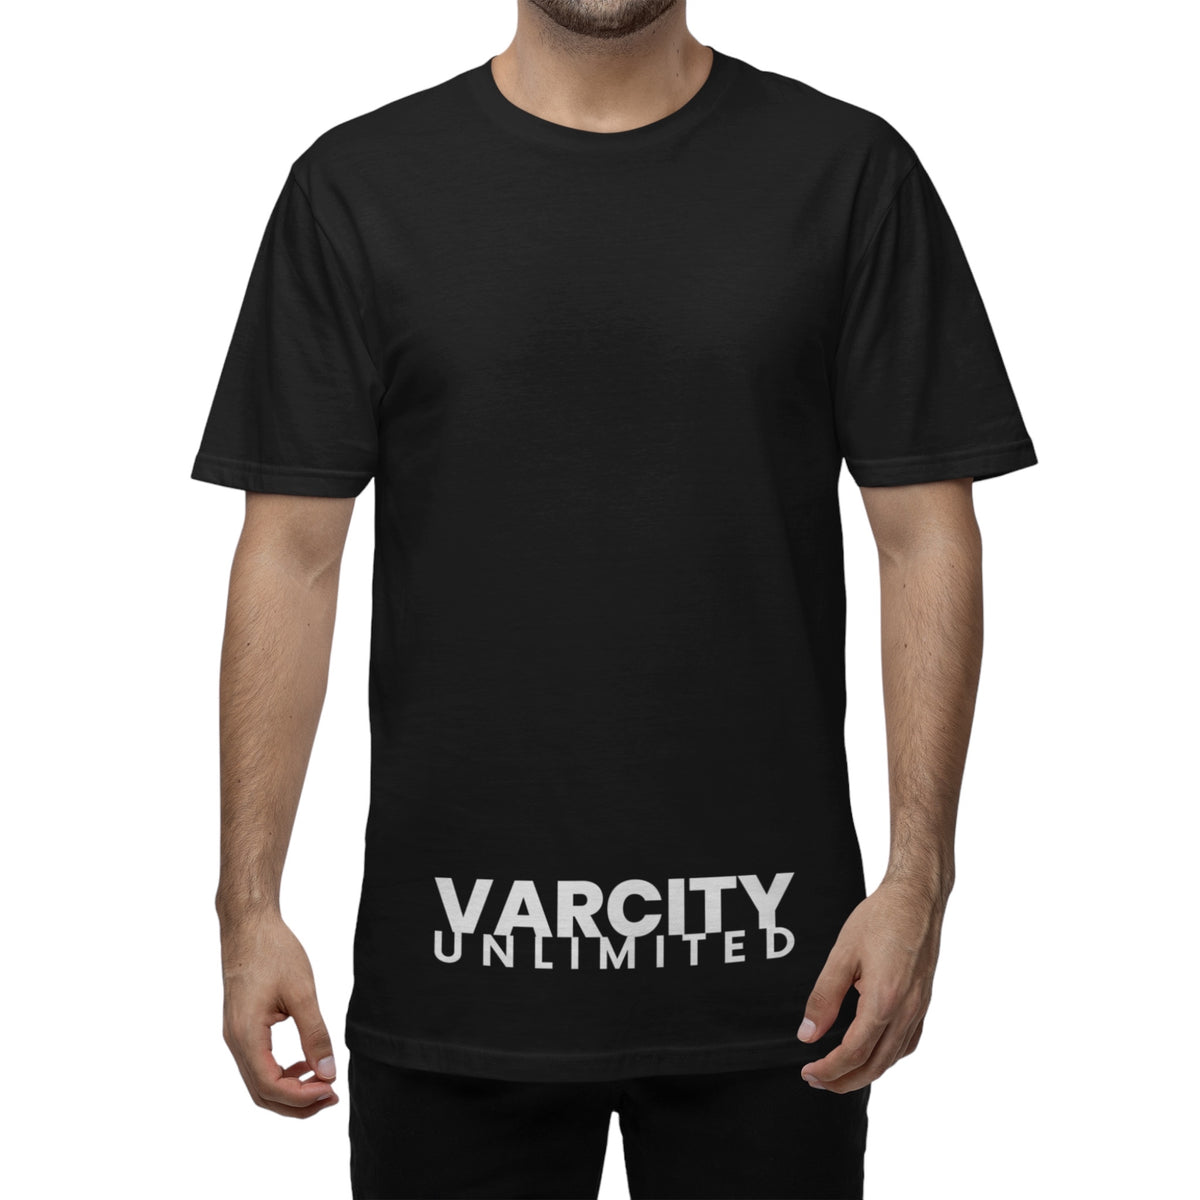 Varcity Unlimited Premium Statement T Shirt Black